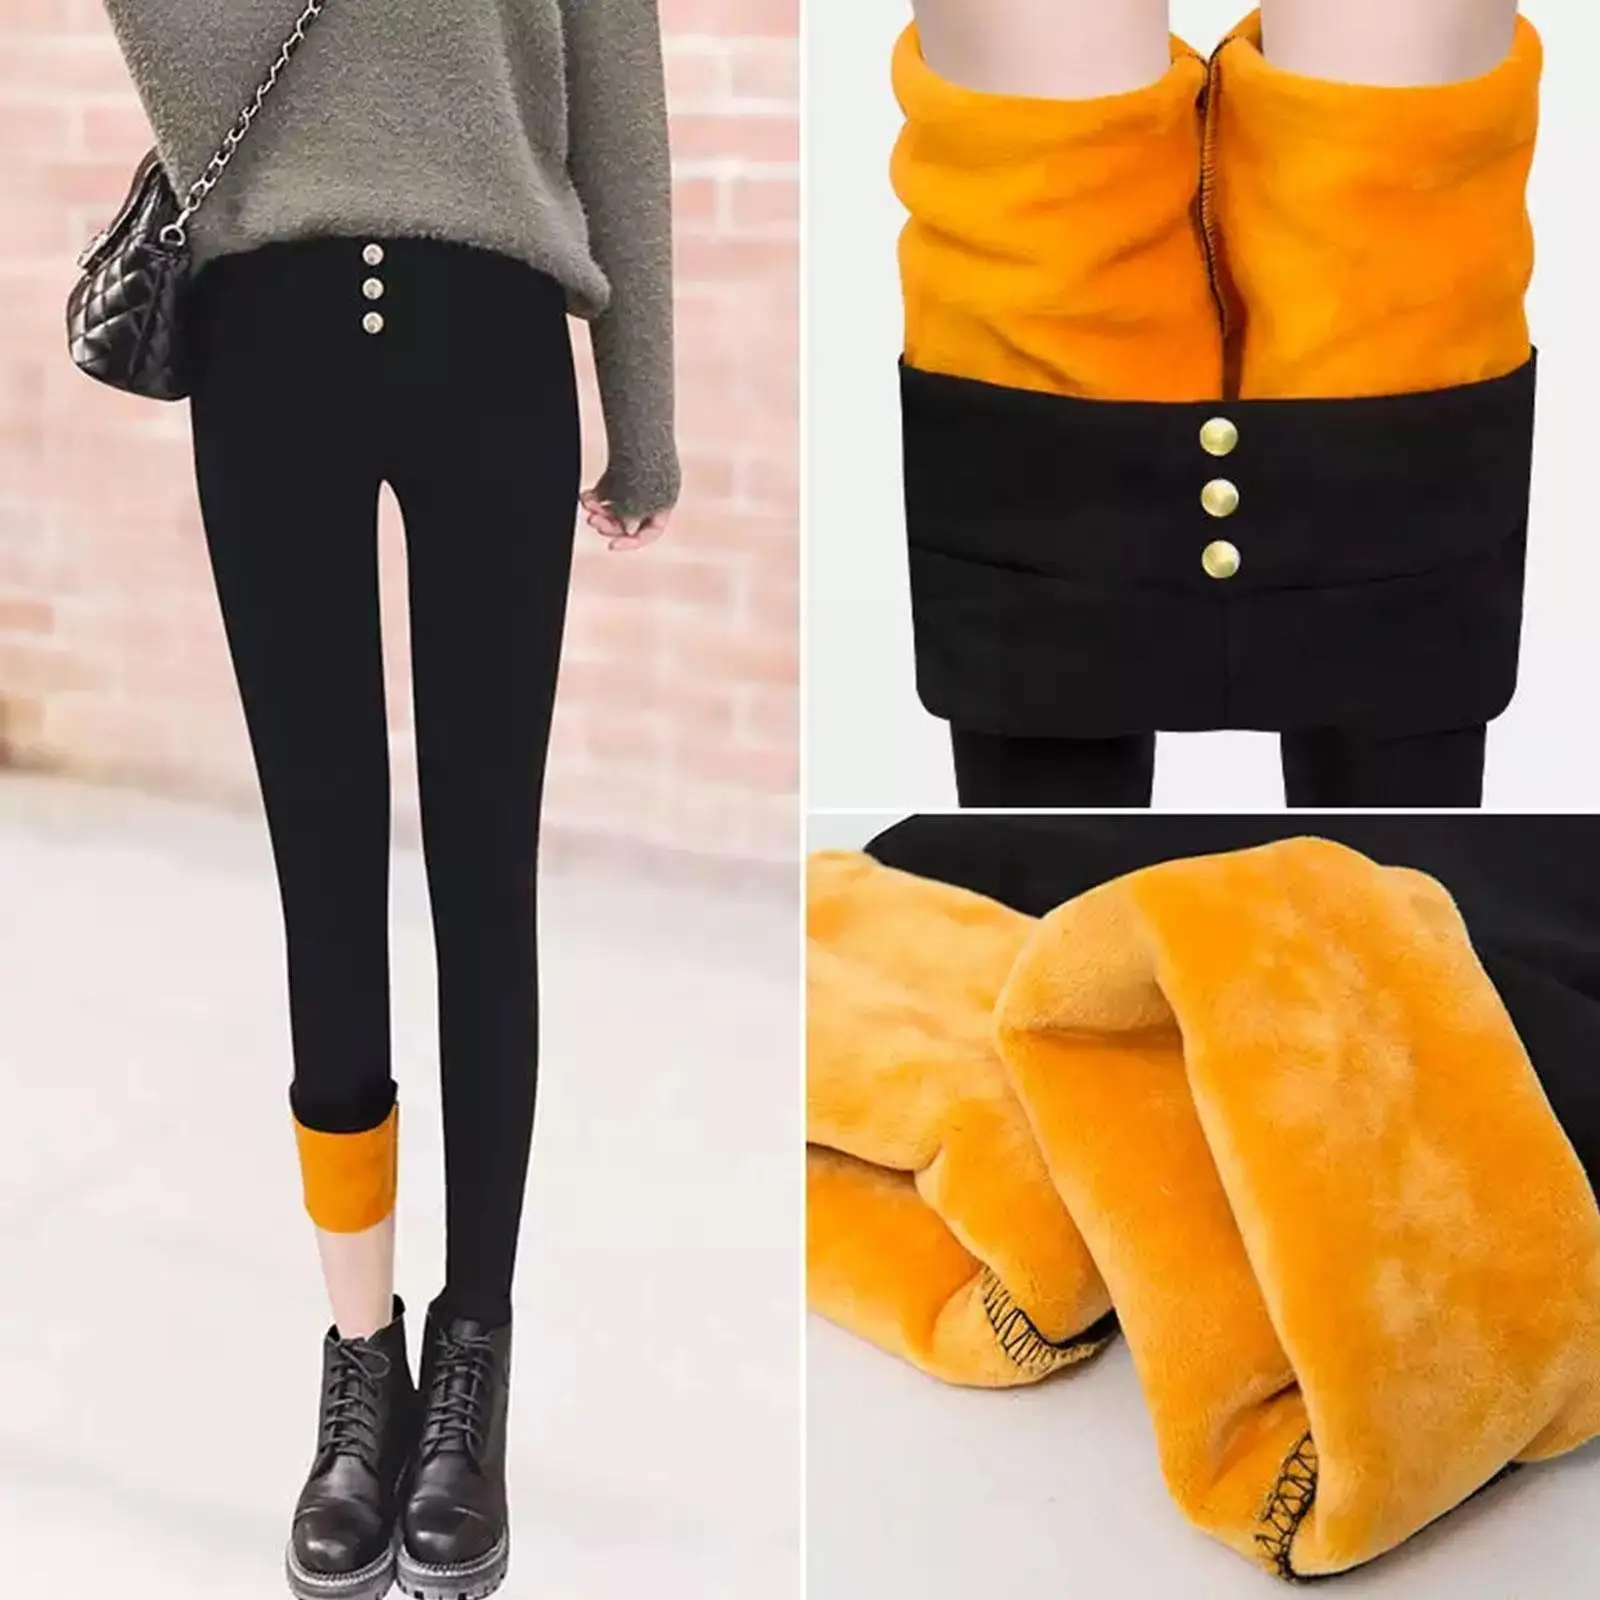 

Women's Thermal Stretchy Leggings Pants Winter Warm Keep Yellow Waist Legging Pencil Lined Hight Thick Pants Fleece Velvet G2R2